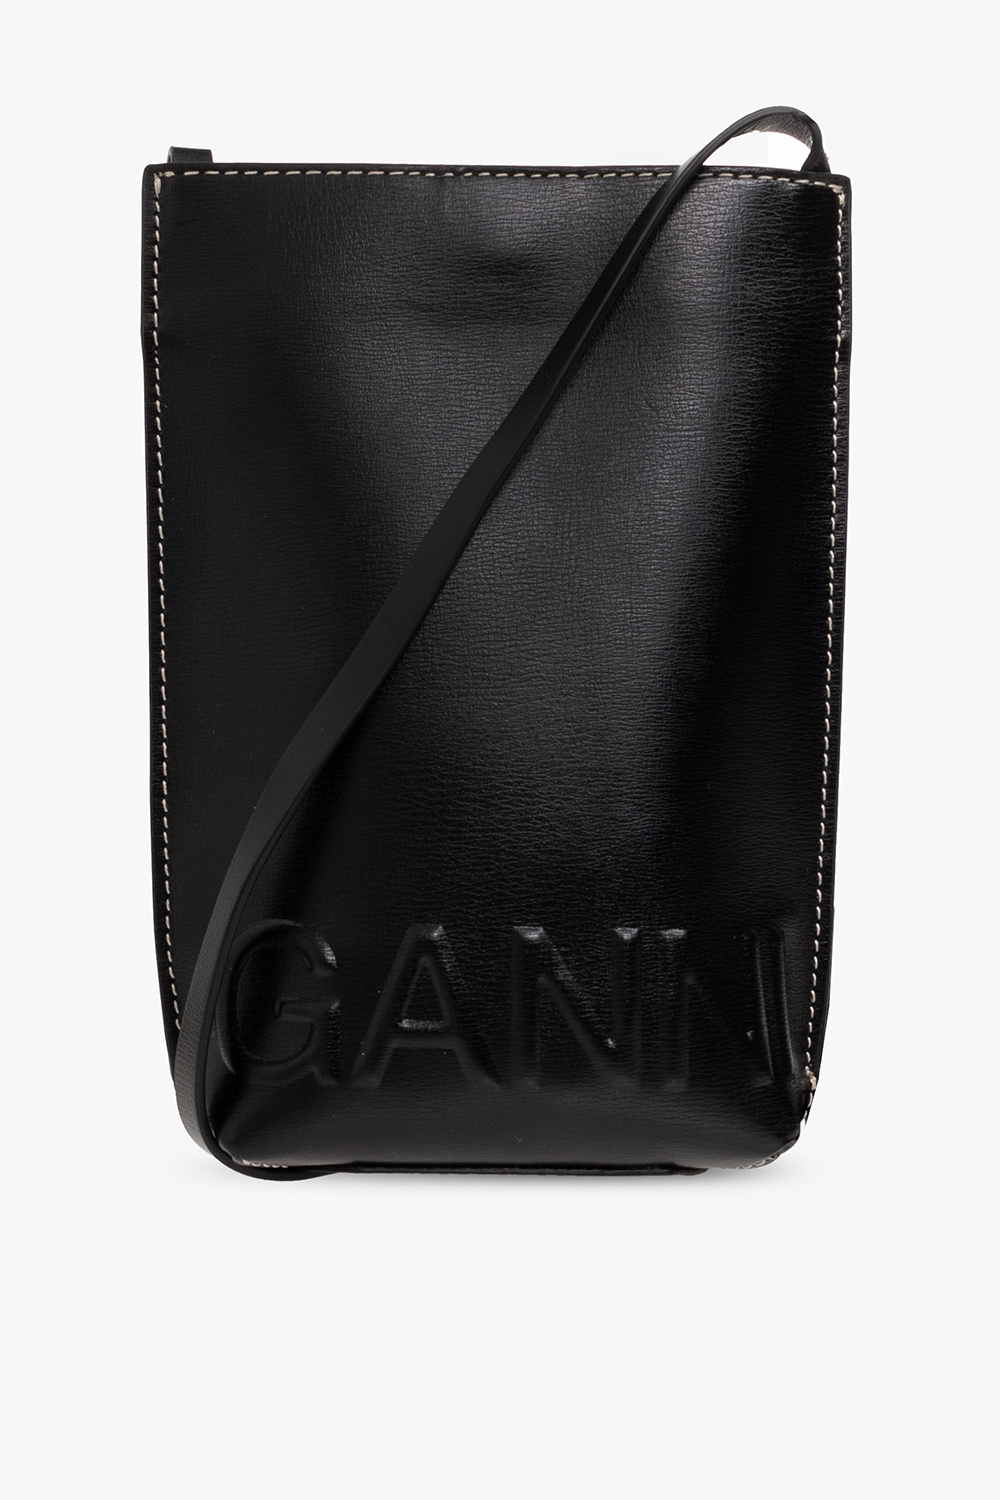 Ganni Shoulder bag with logo | Women's Bags | Vitkac